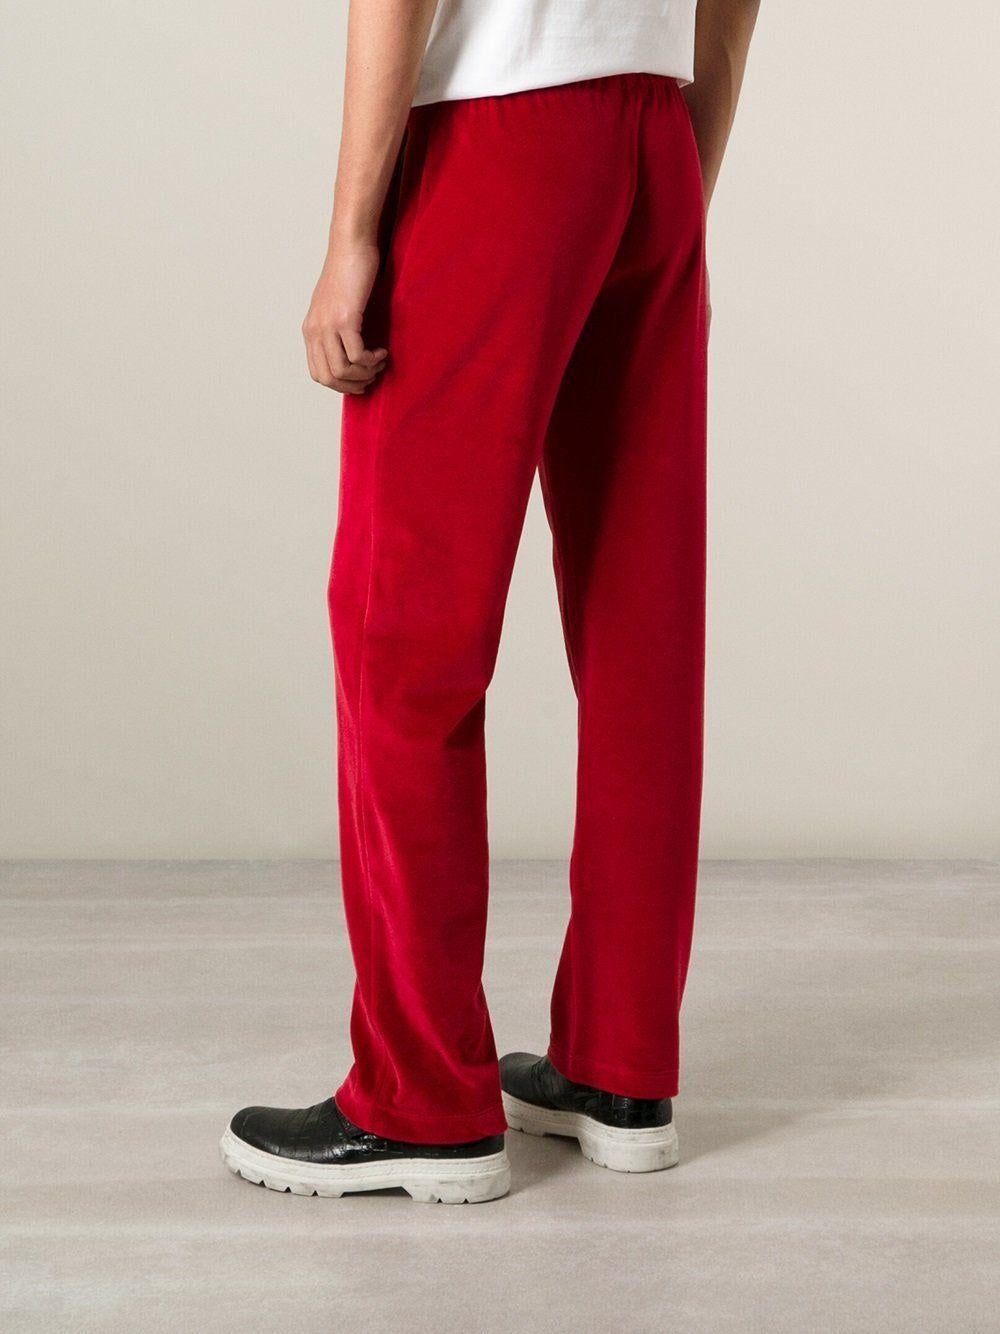 New Versace Medusa Men's Red Velvet Sweatpants Black Leather Trim size XL 2